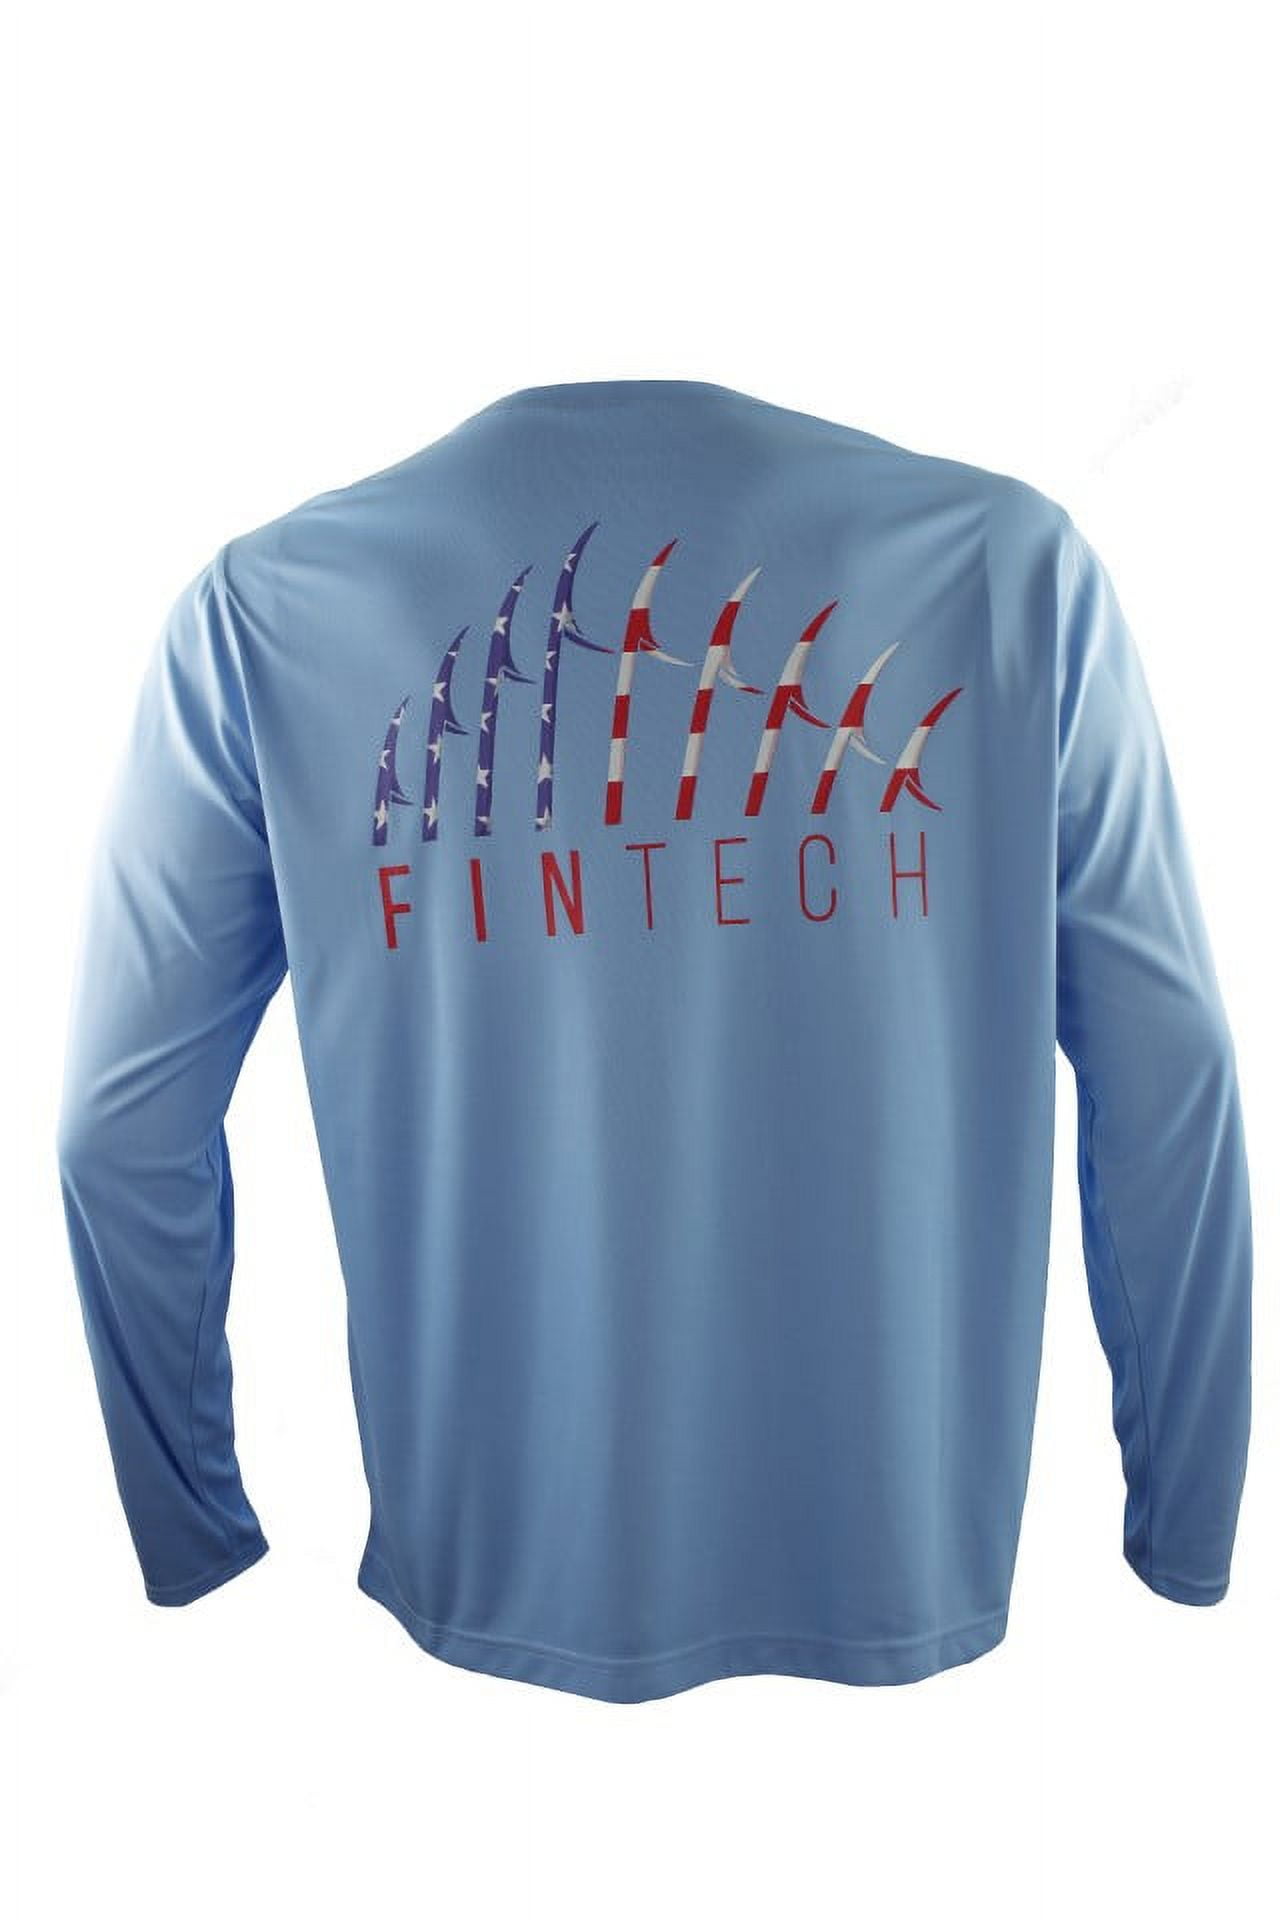 FinTech Men's Long Sleeve Fishing Shirt Freedom FinTech - 3XL 